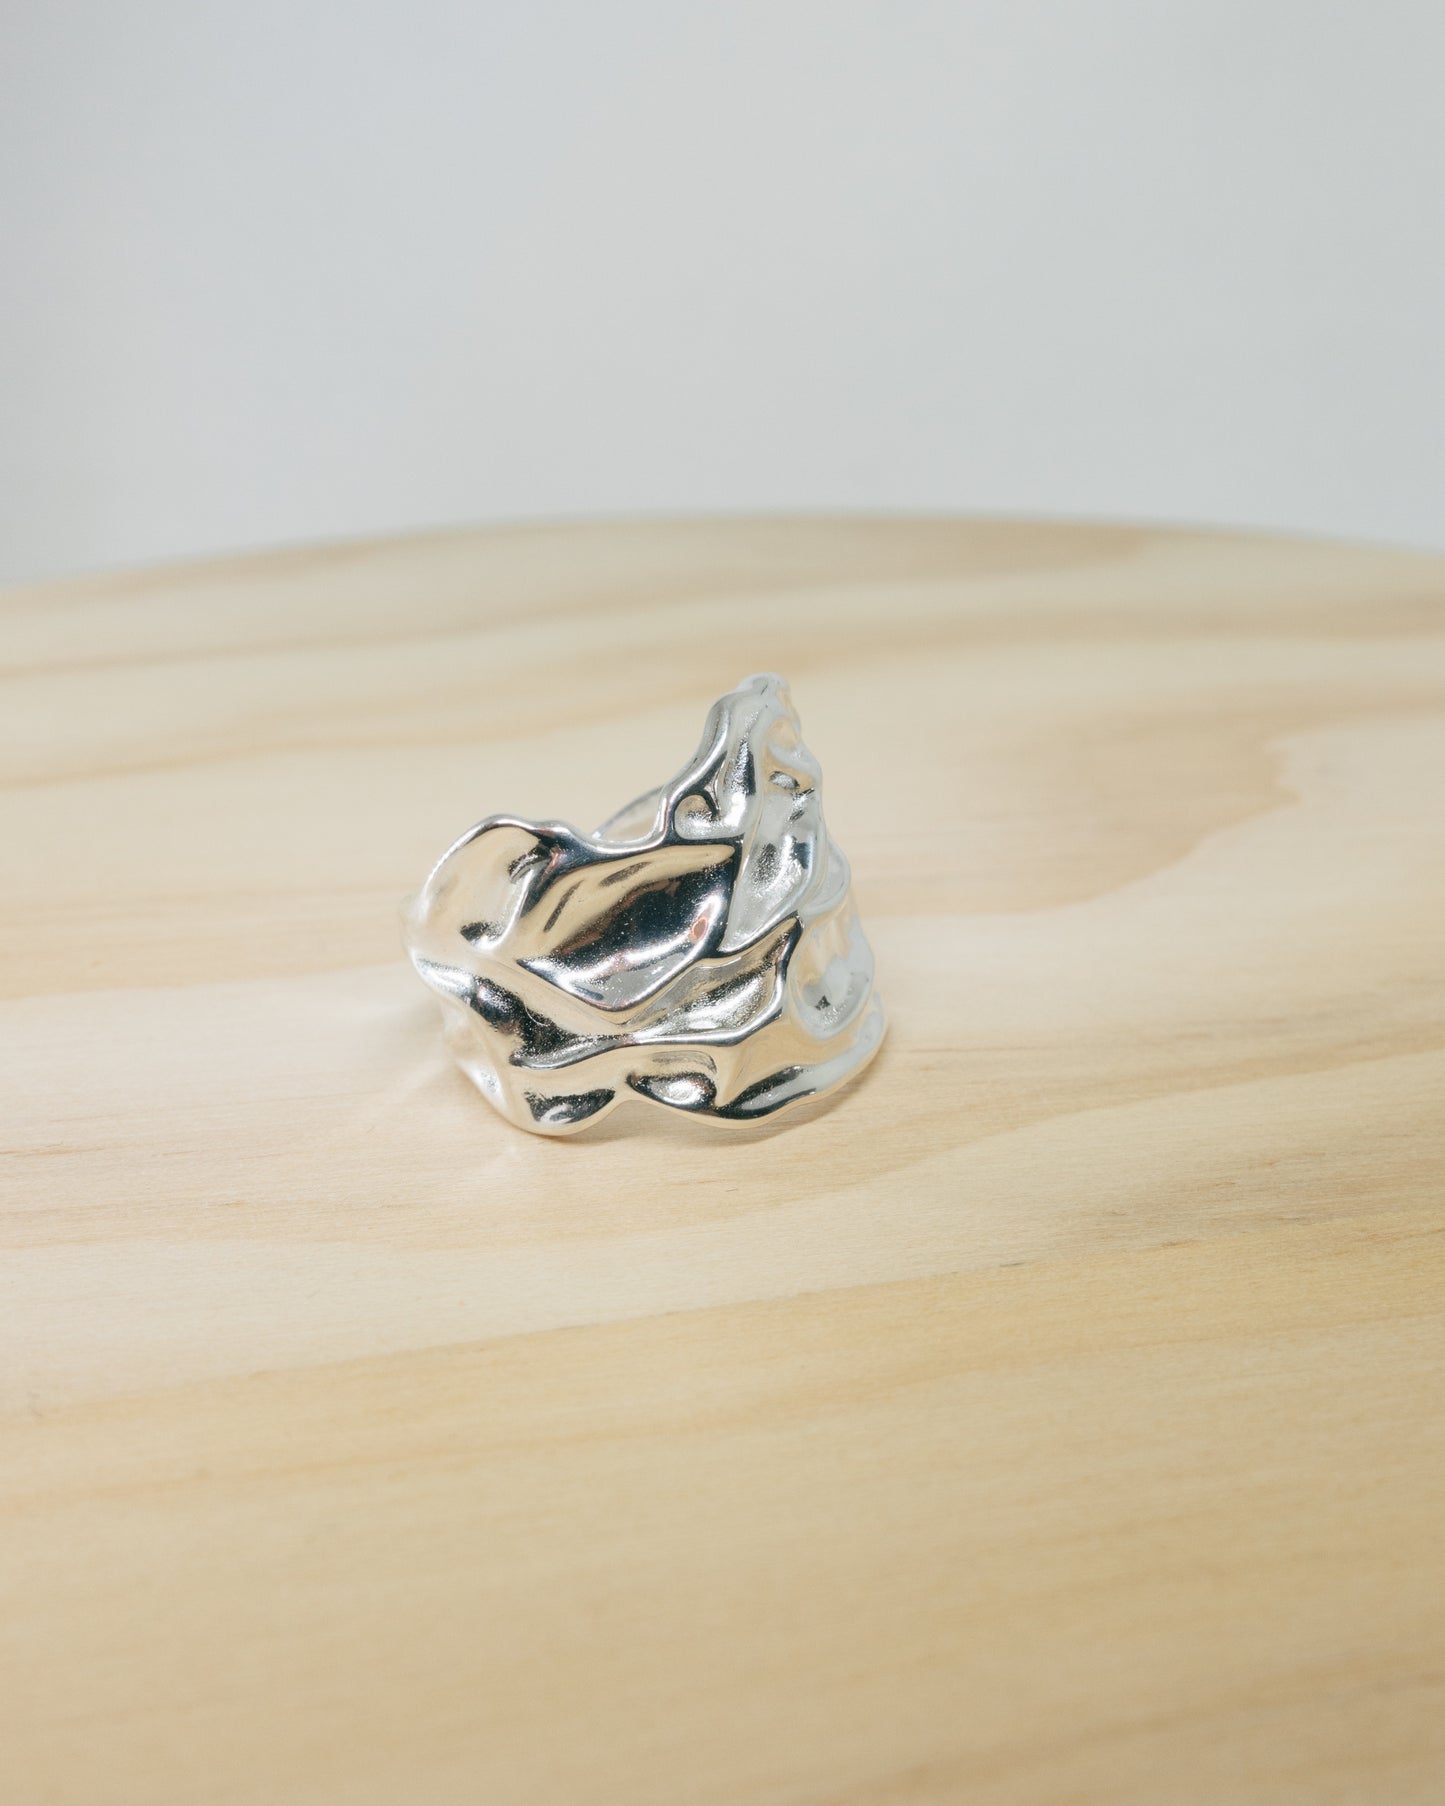 Ronan oversized sculpture ring